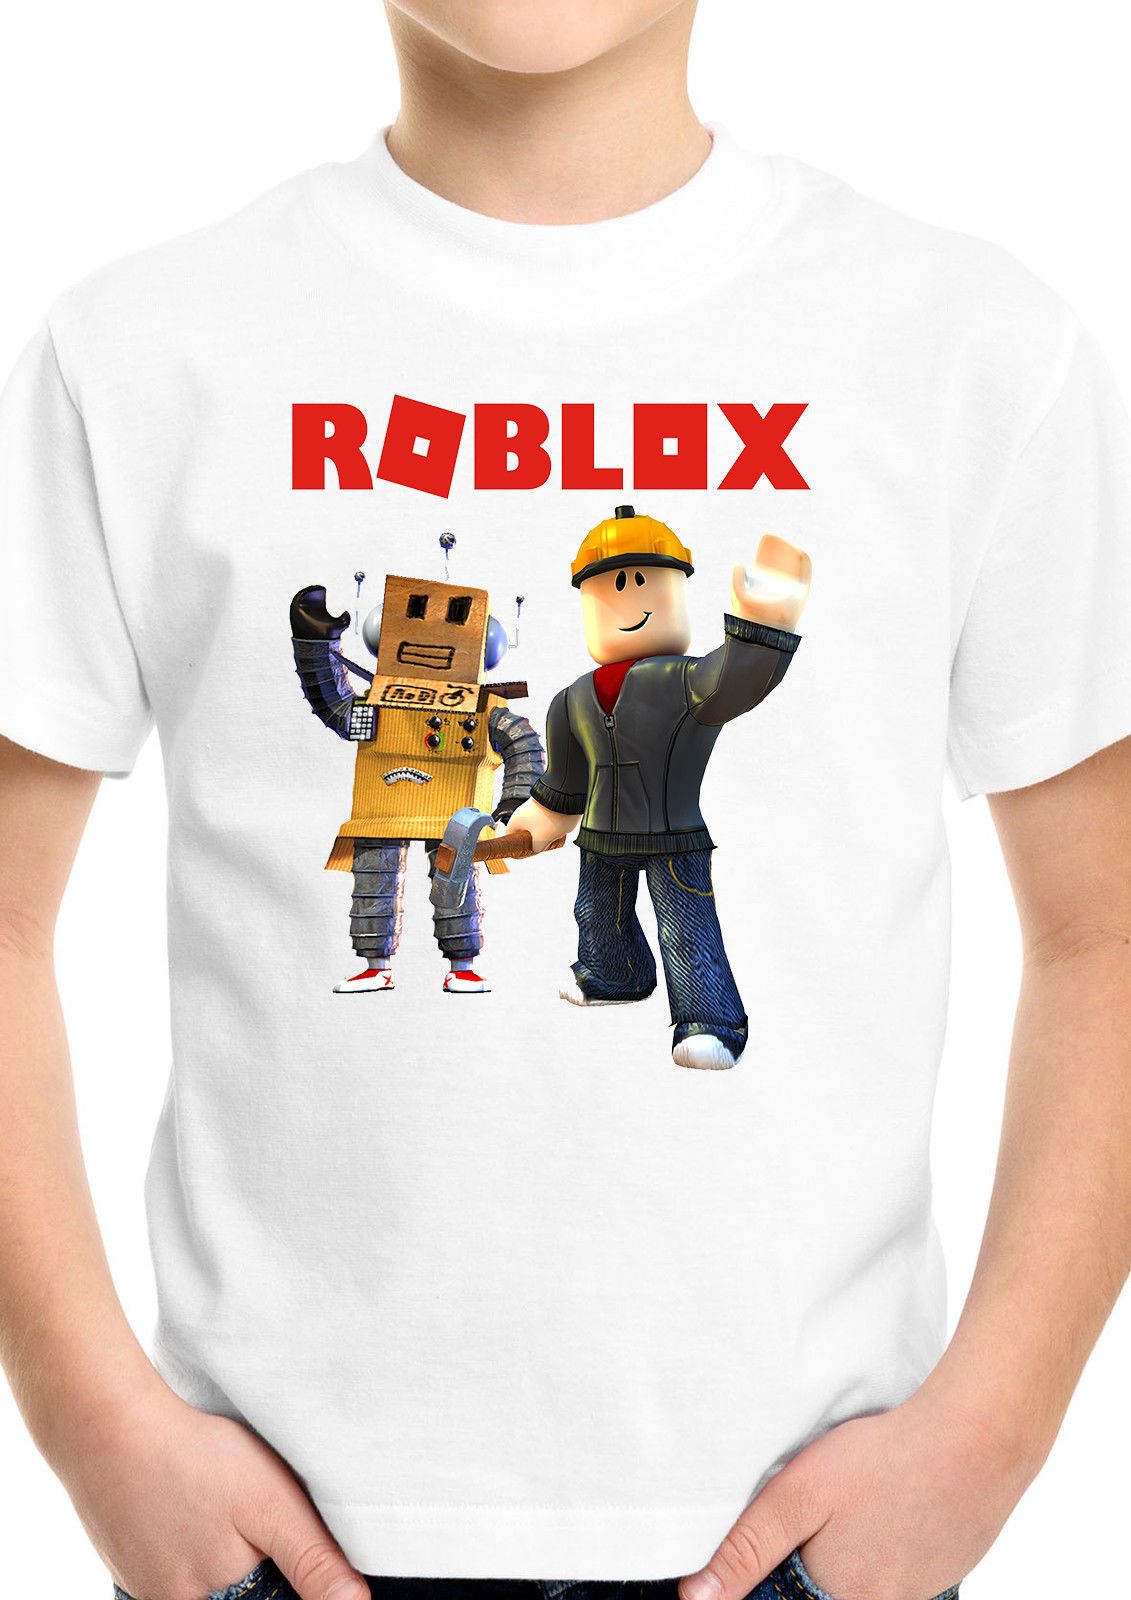 How To Make A Cool Shirt On Roblox Nils Stucki Kieferorthopäde - roblox t shirts download nils stucki kieferorthop#U00e4de